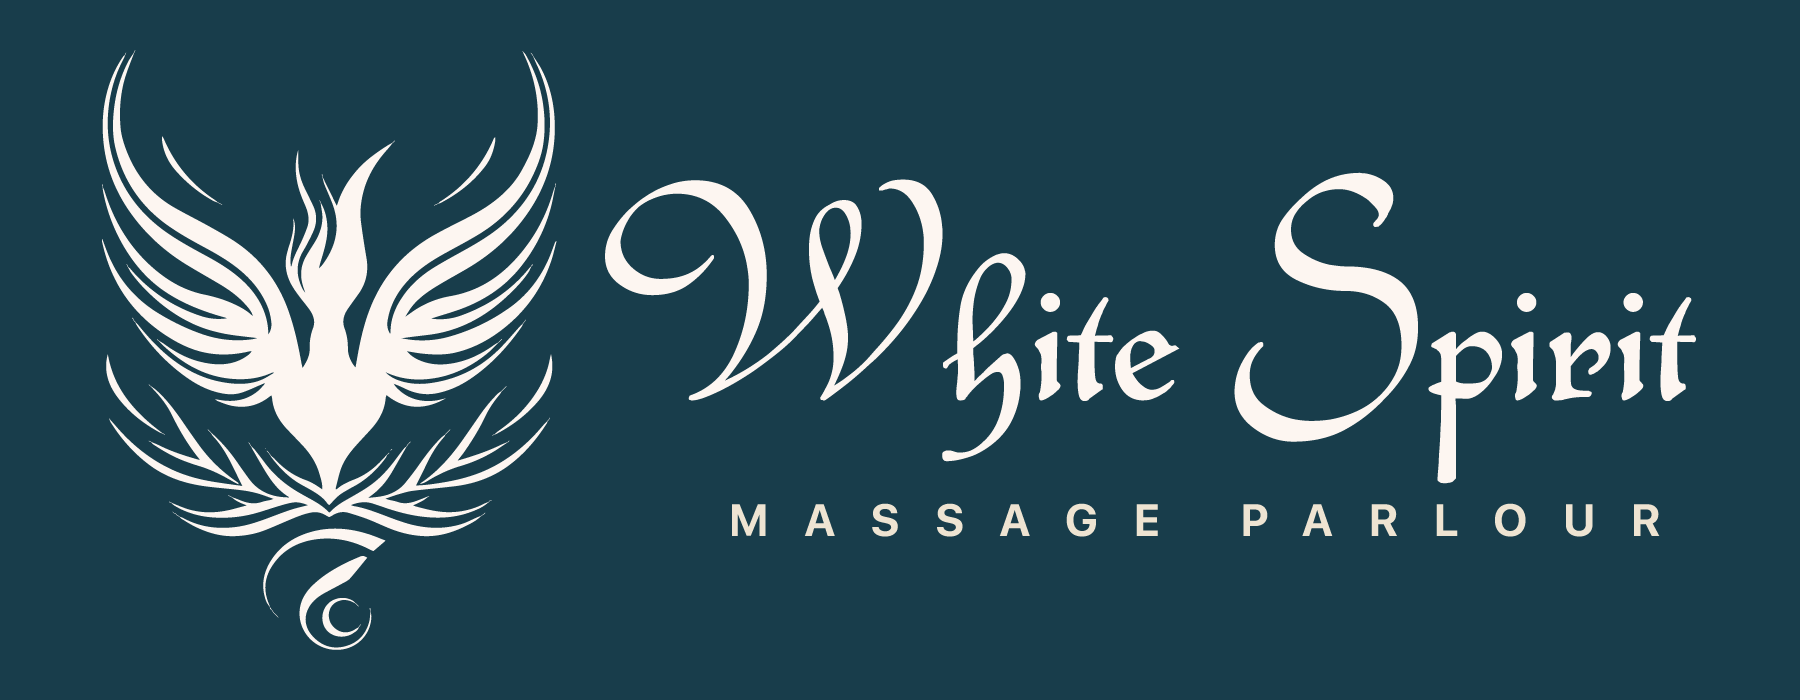 White Spirit Thai Spa & Massage Parlour Site Logo - Number 1 Massage in Business Bay Dubai. Number 1 Spa in Business Bay Dubai. Thai Massage in Business Bay Dubai. Massage and Spa in Business Bay Dubai. Massage Business Bay delight